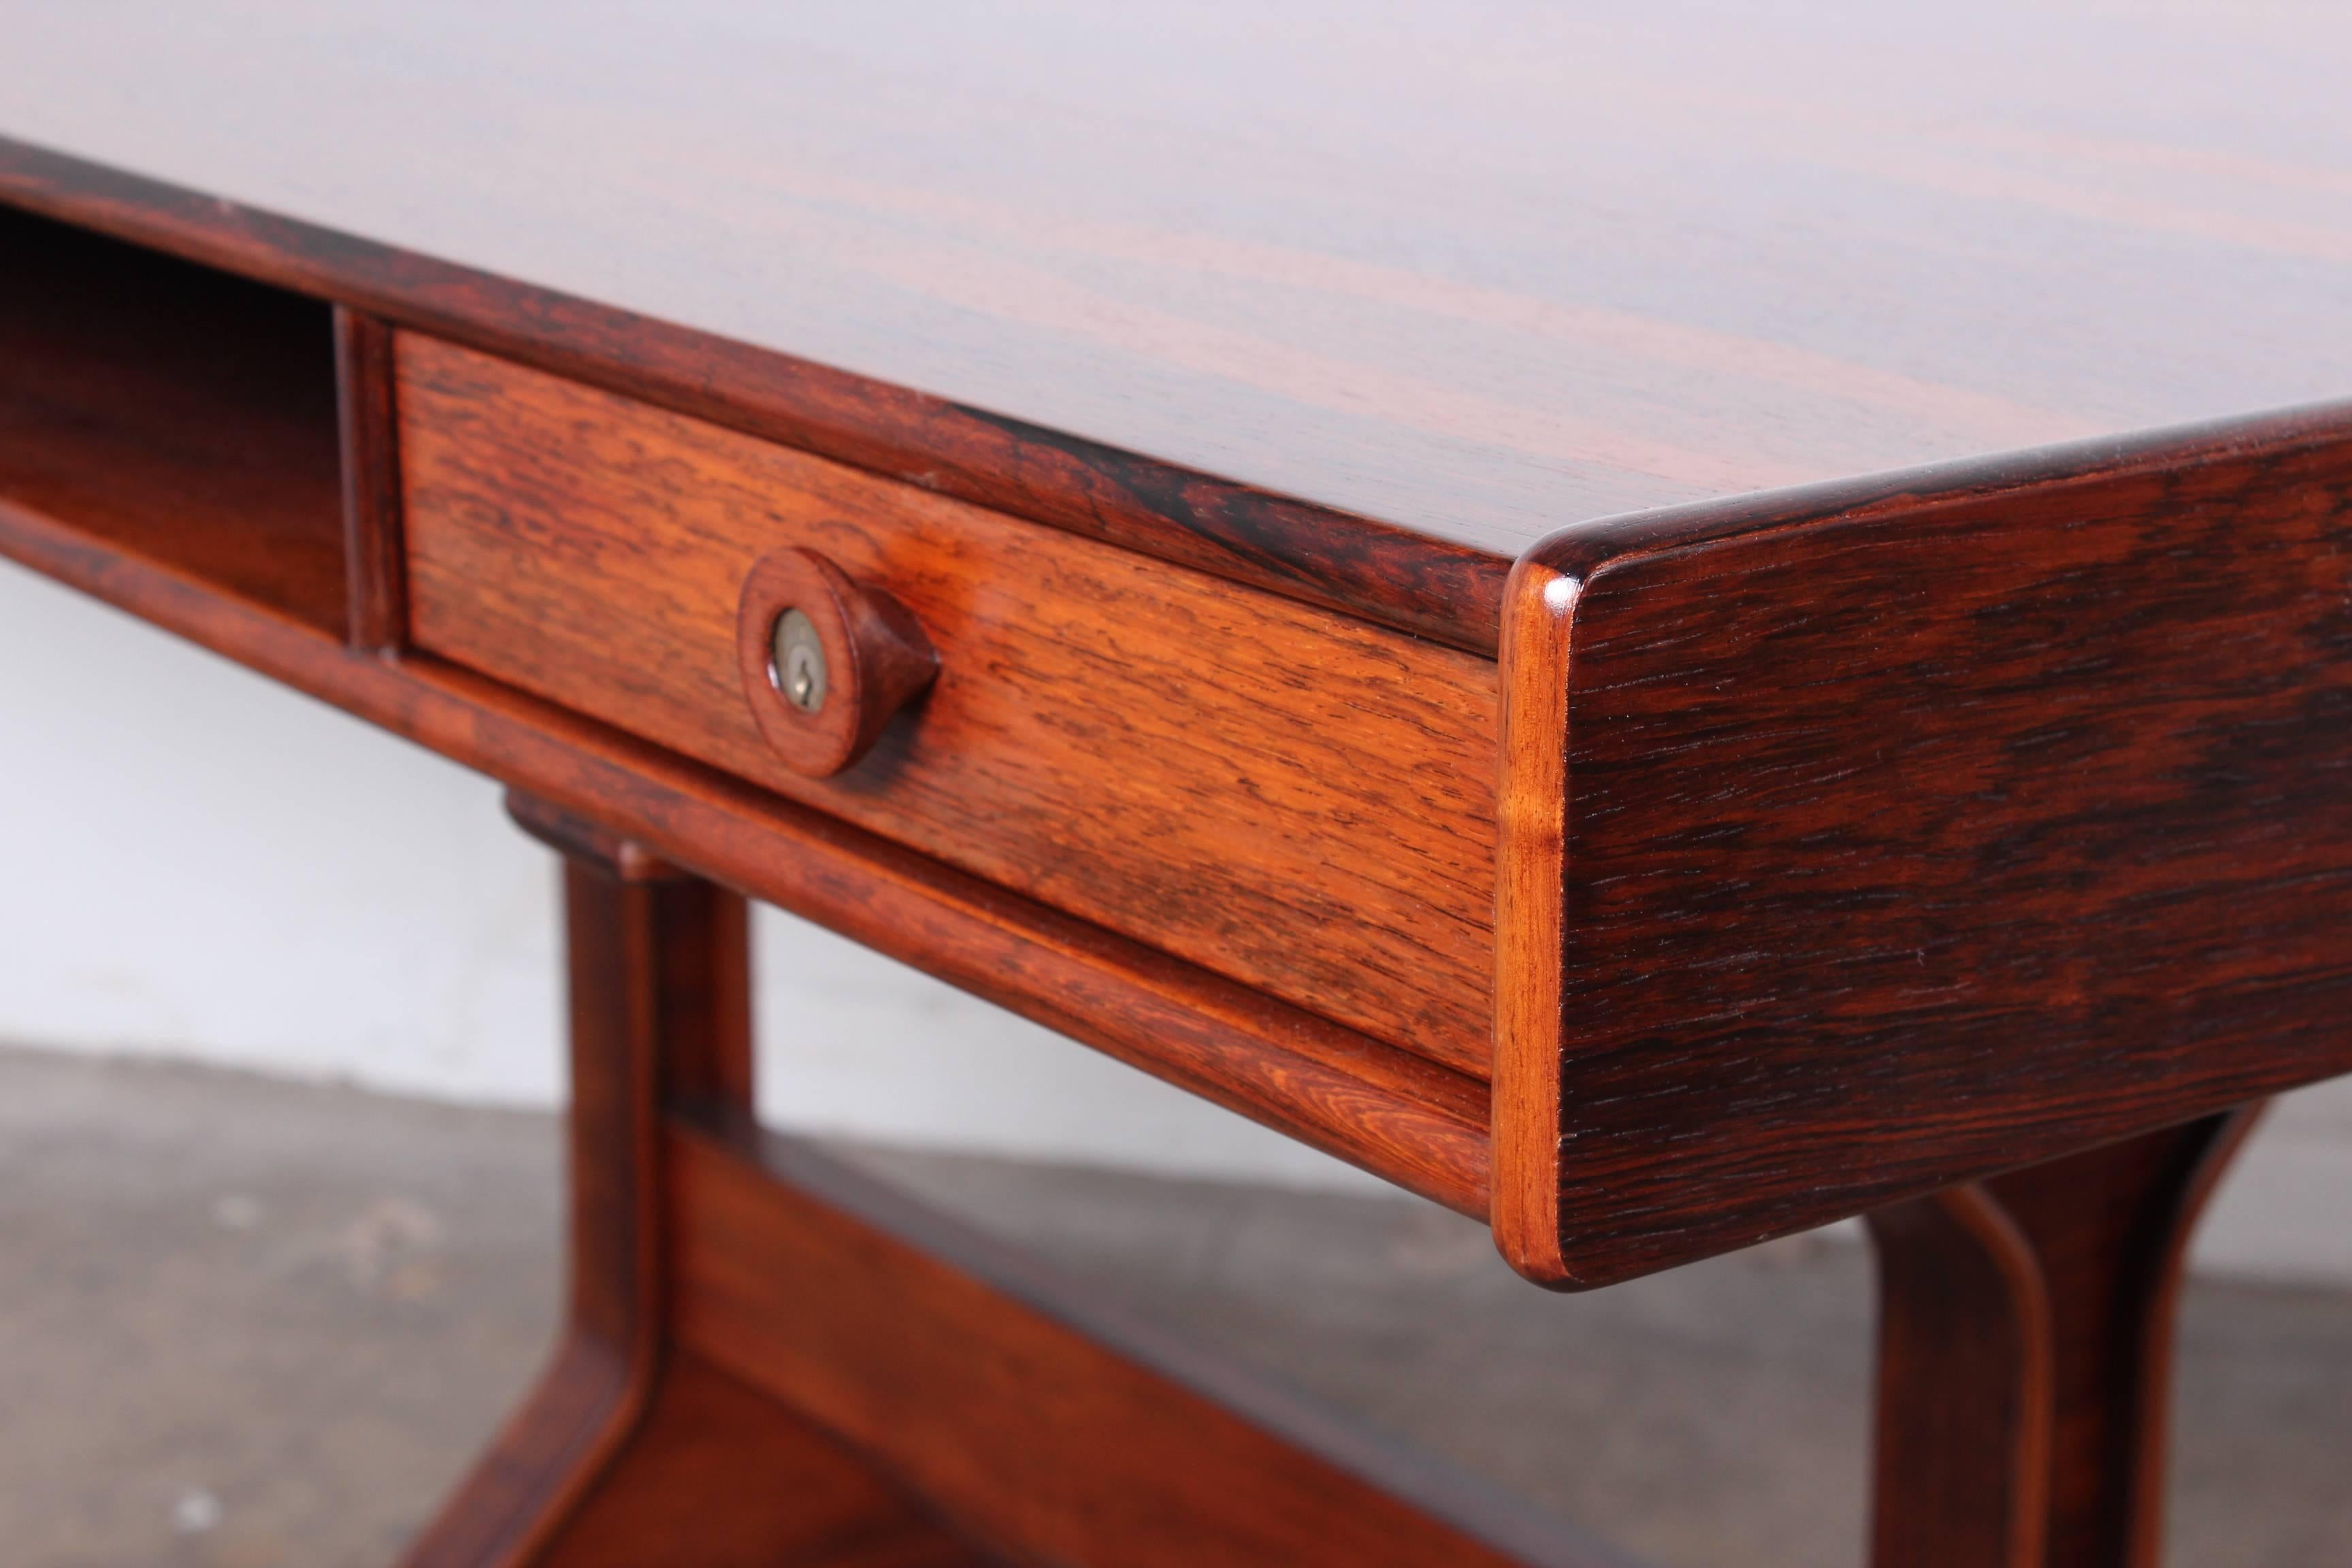 A rosewood desk designed by Gianfranco Frattini for Bernini.